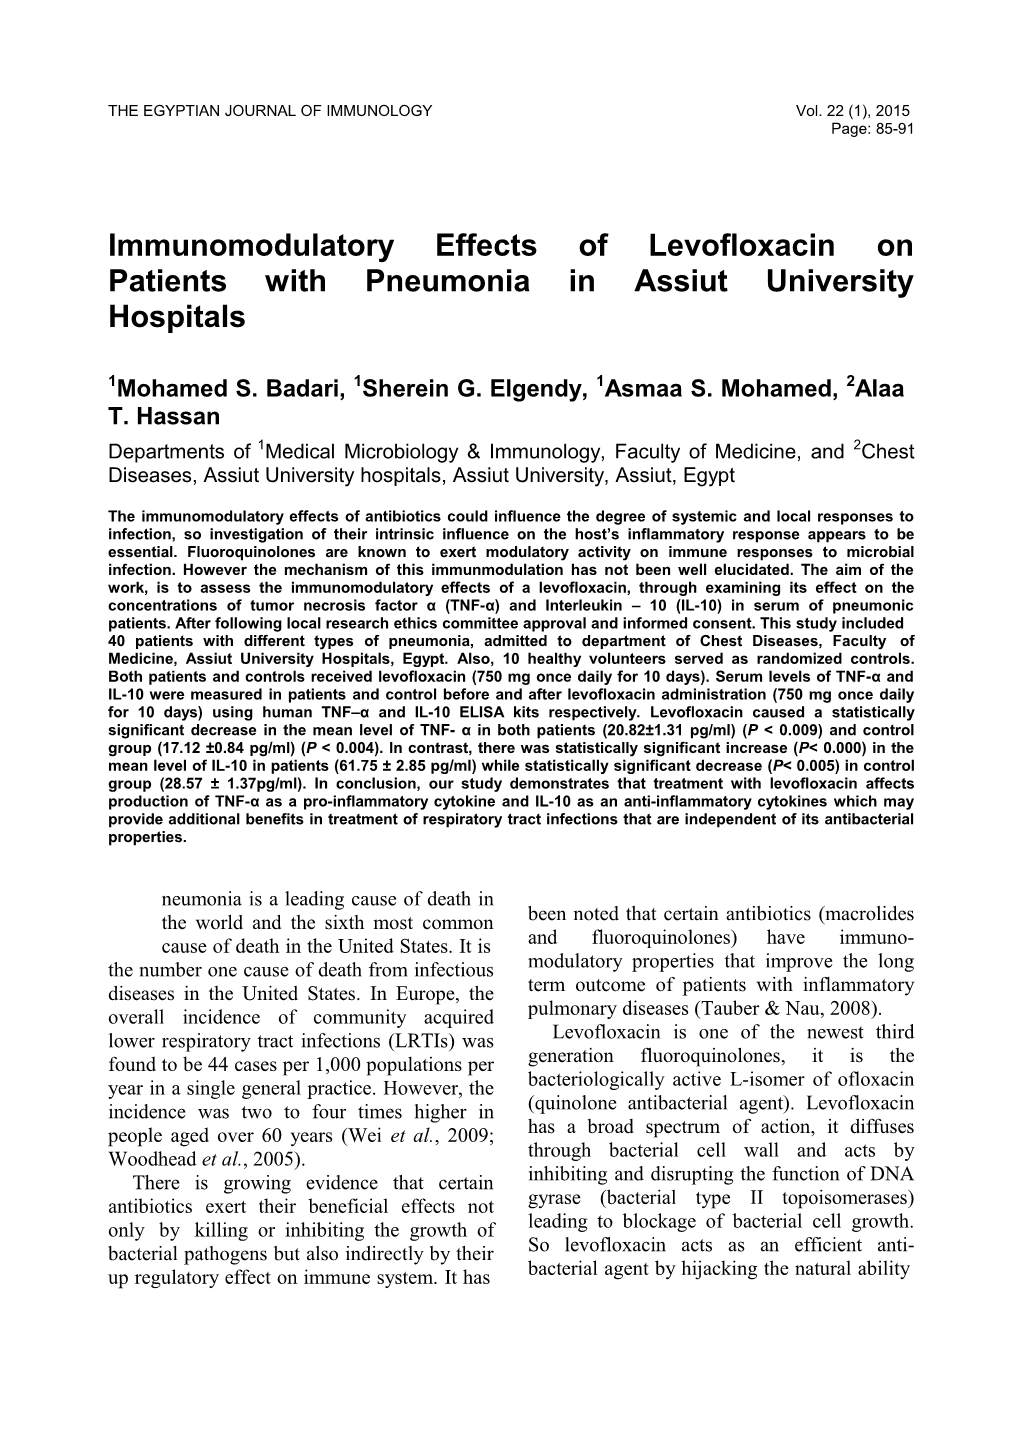 Immunomodulatory Effects of Levofloxacin on Patients with Pneumonia in Assiut University